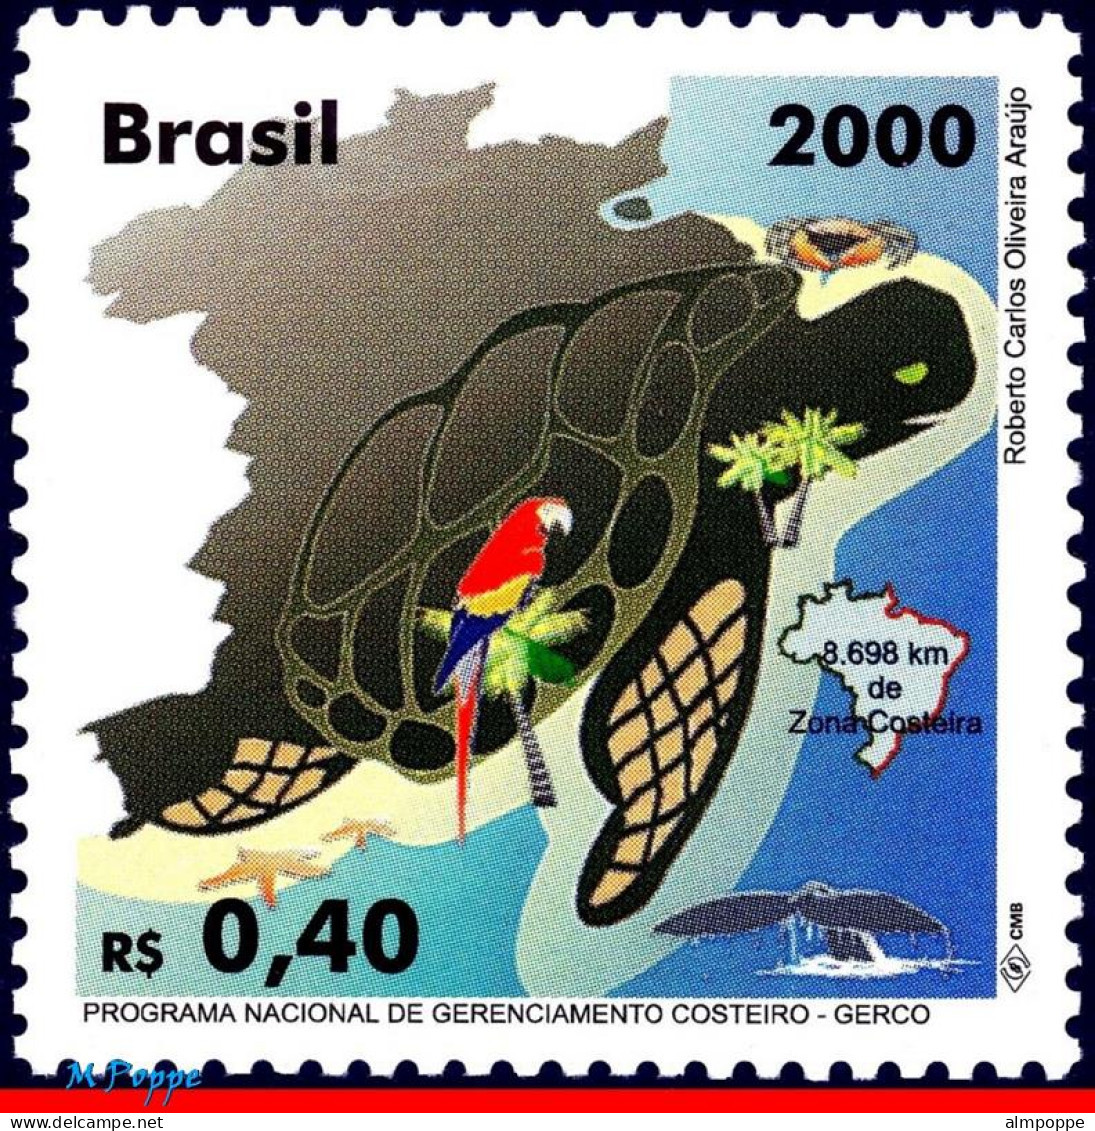 Ref. BR-2742 BRAZIL 2000 - GERCO, COASTAL ZONE,PARROT, TURTLE, WHALE, MI# 3028, MNH, MAPS 1V Sc# 2742 - Neufs